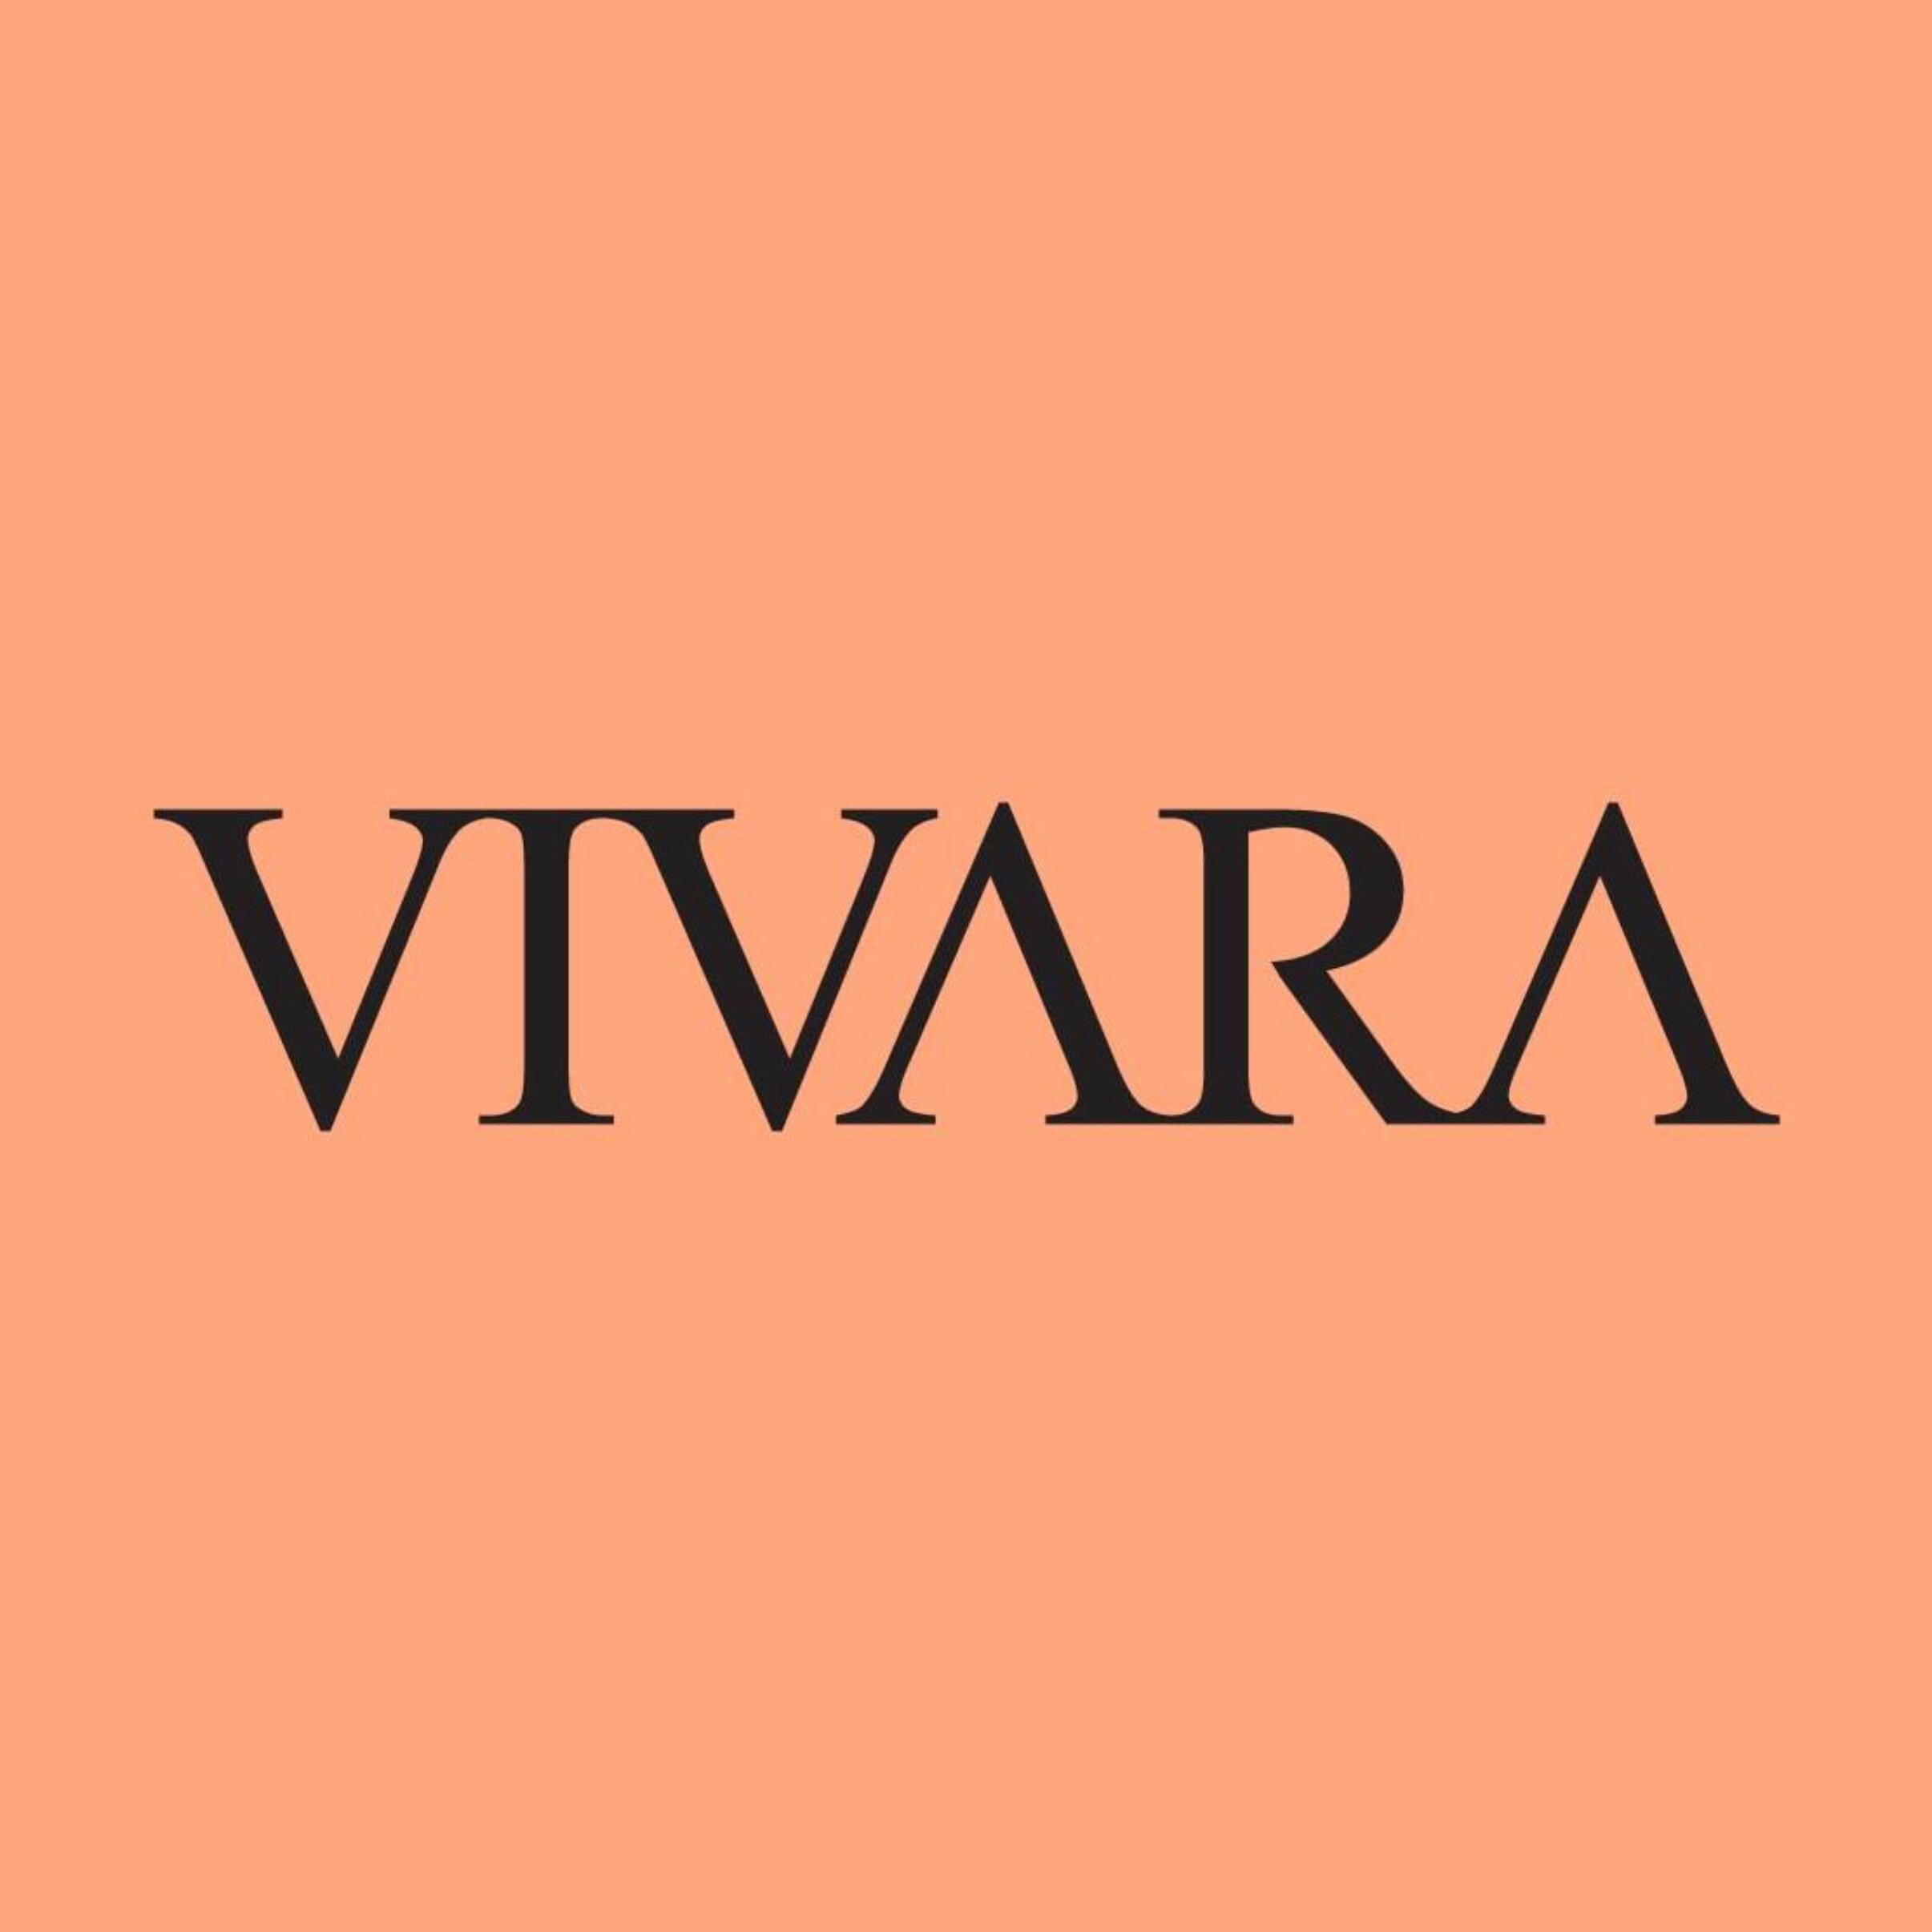 Cartão Presente Vivara - im1524